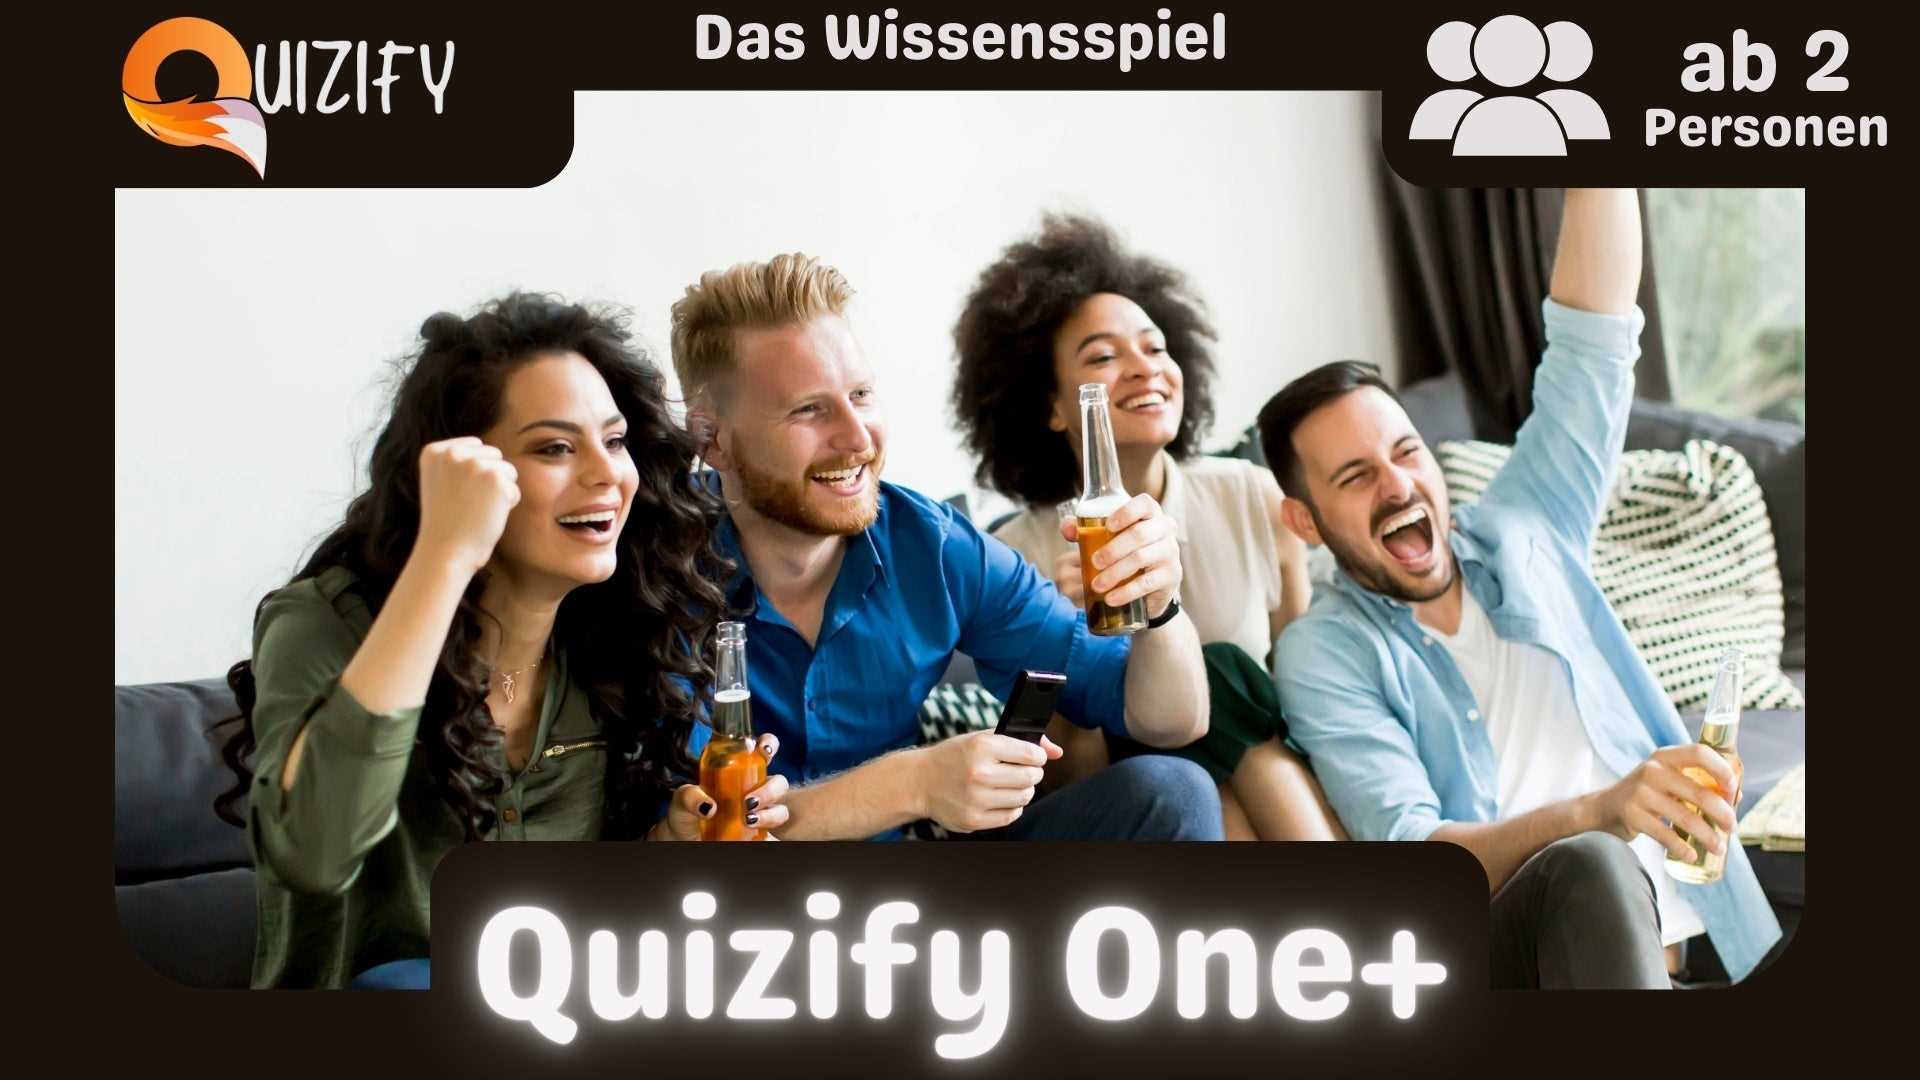 Quizify: One + - Quizify